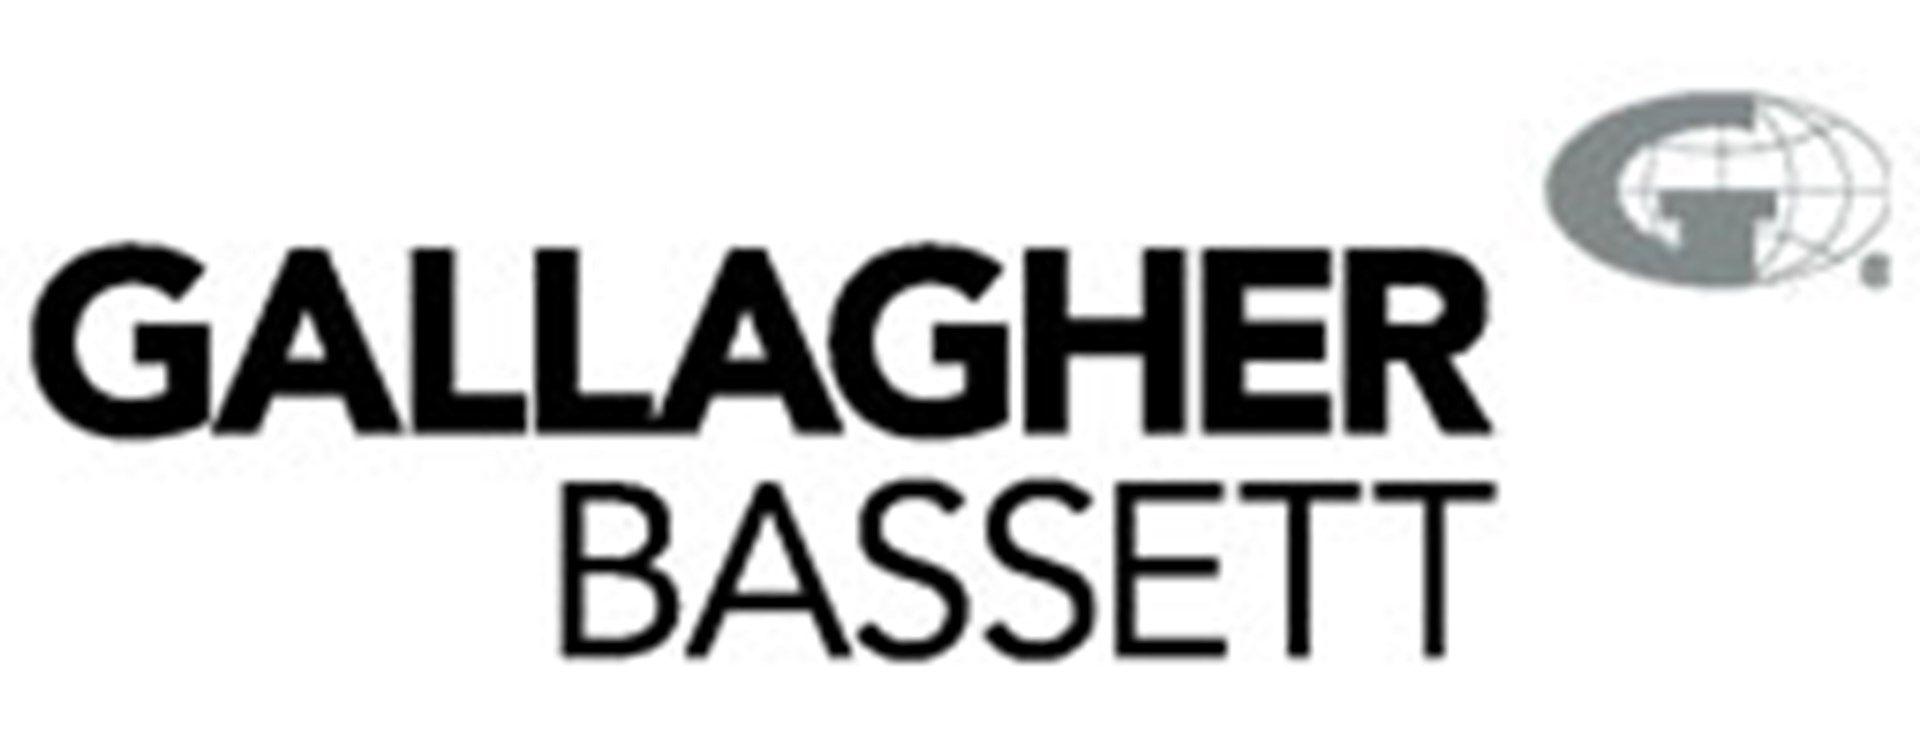 Gallagher Bassett Logo - Gallagher Bassett is fundraising for Maggie's Centres